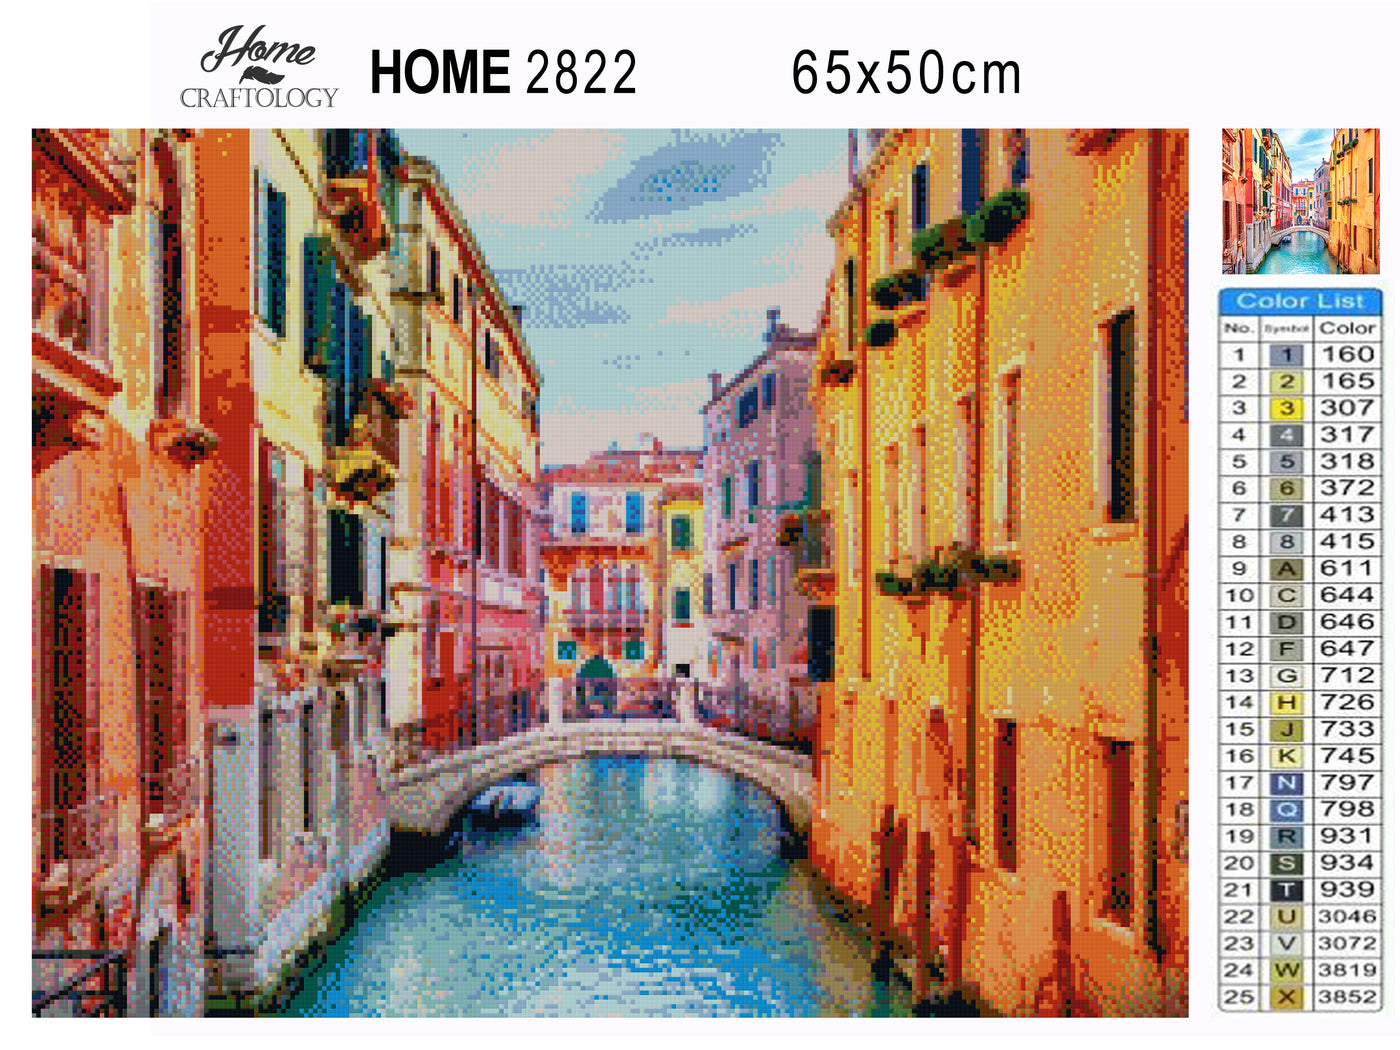 Houses Along Venice Canal - Premium Diamond Painting Kit